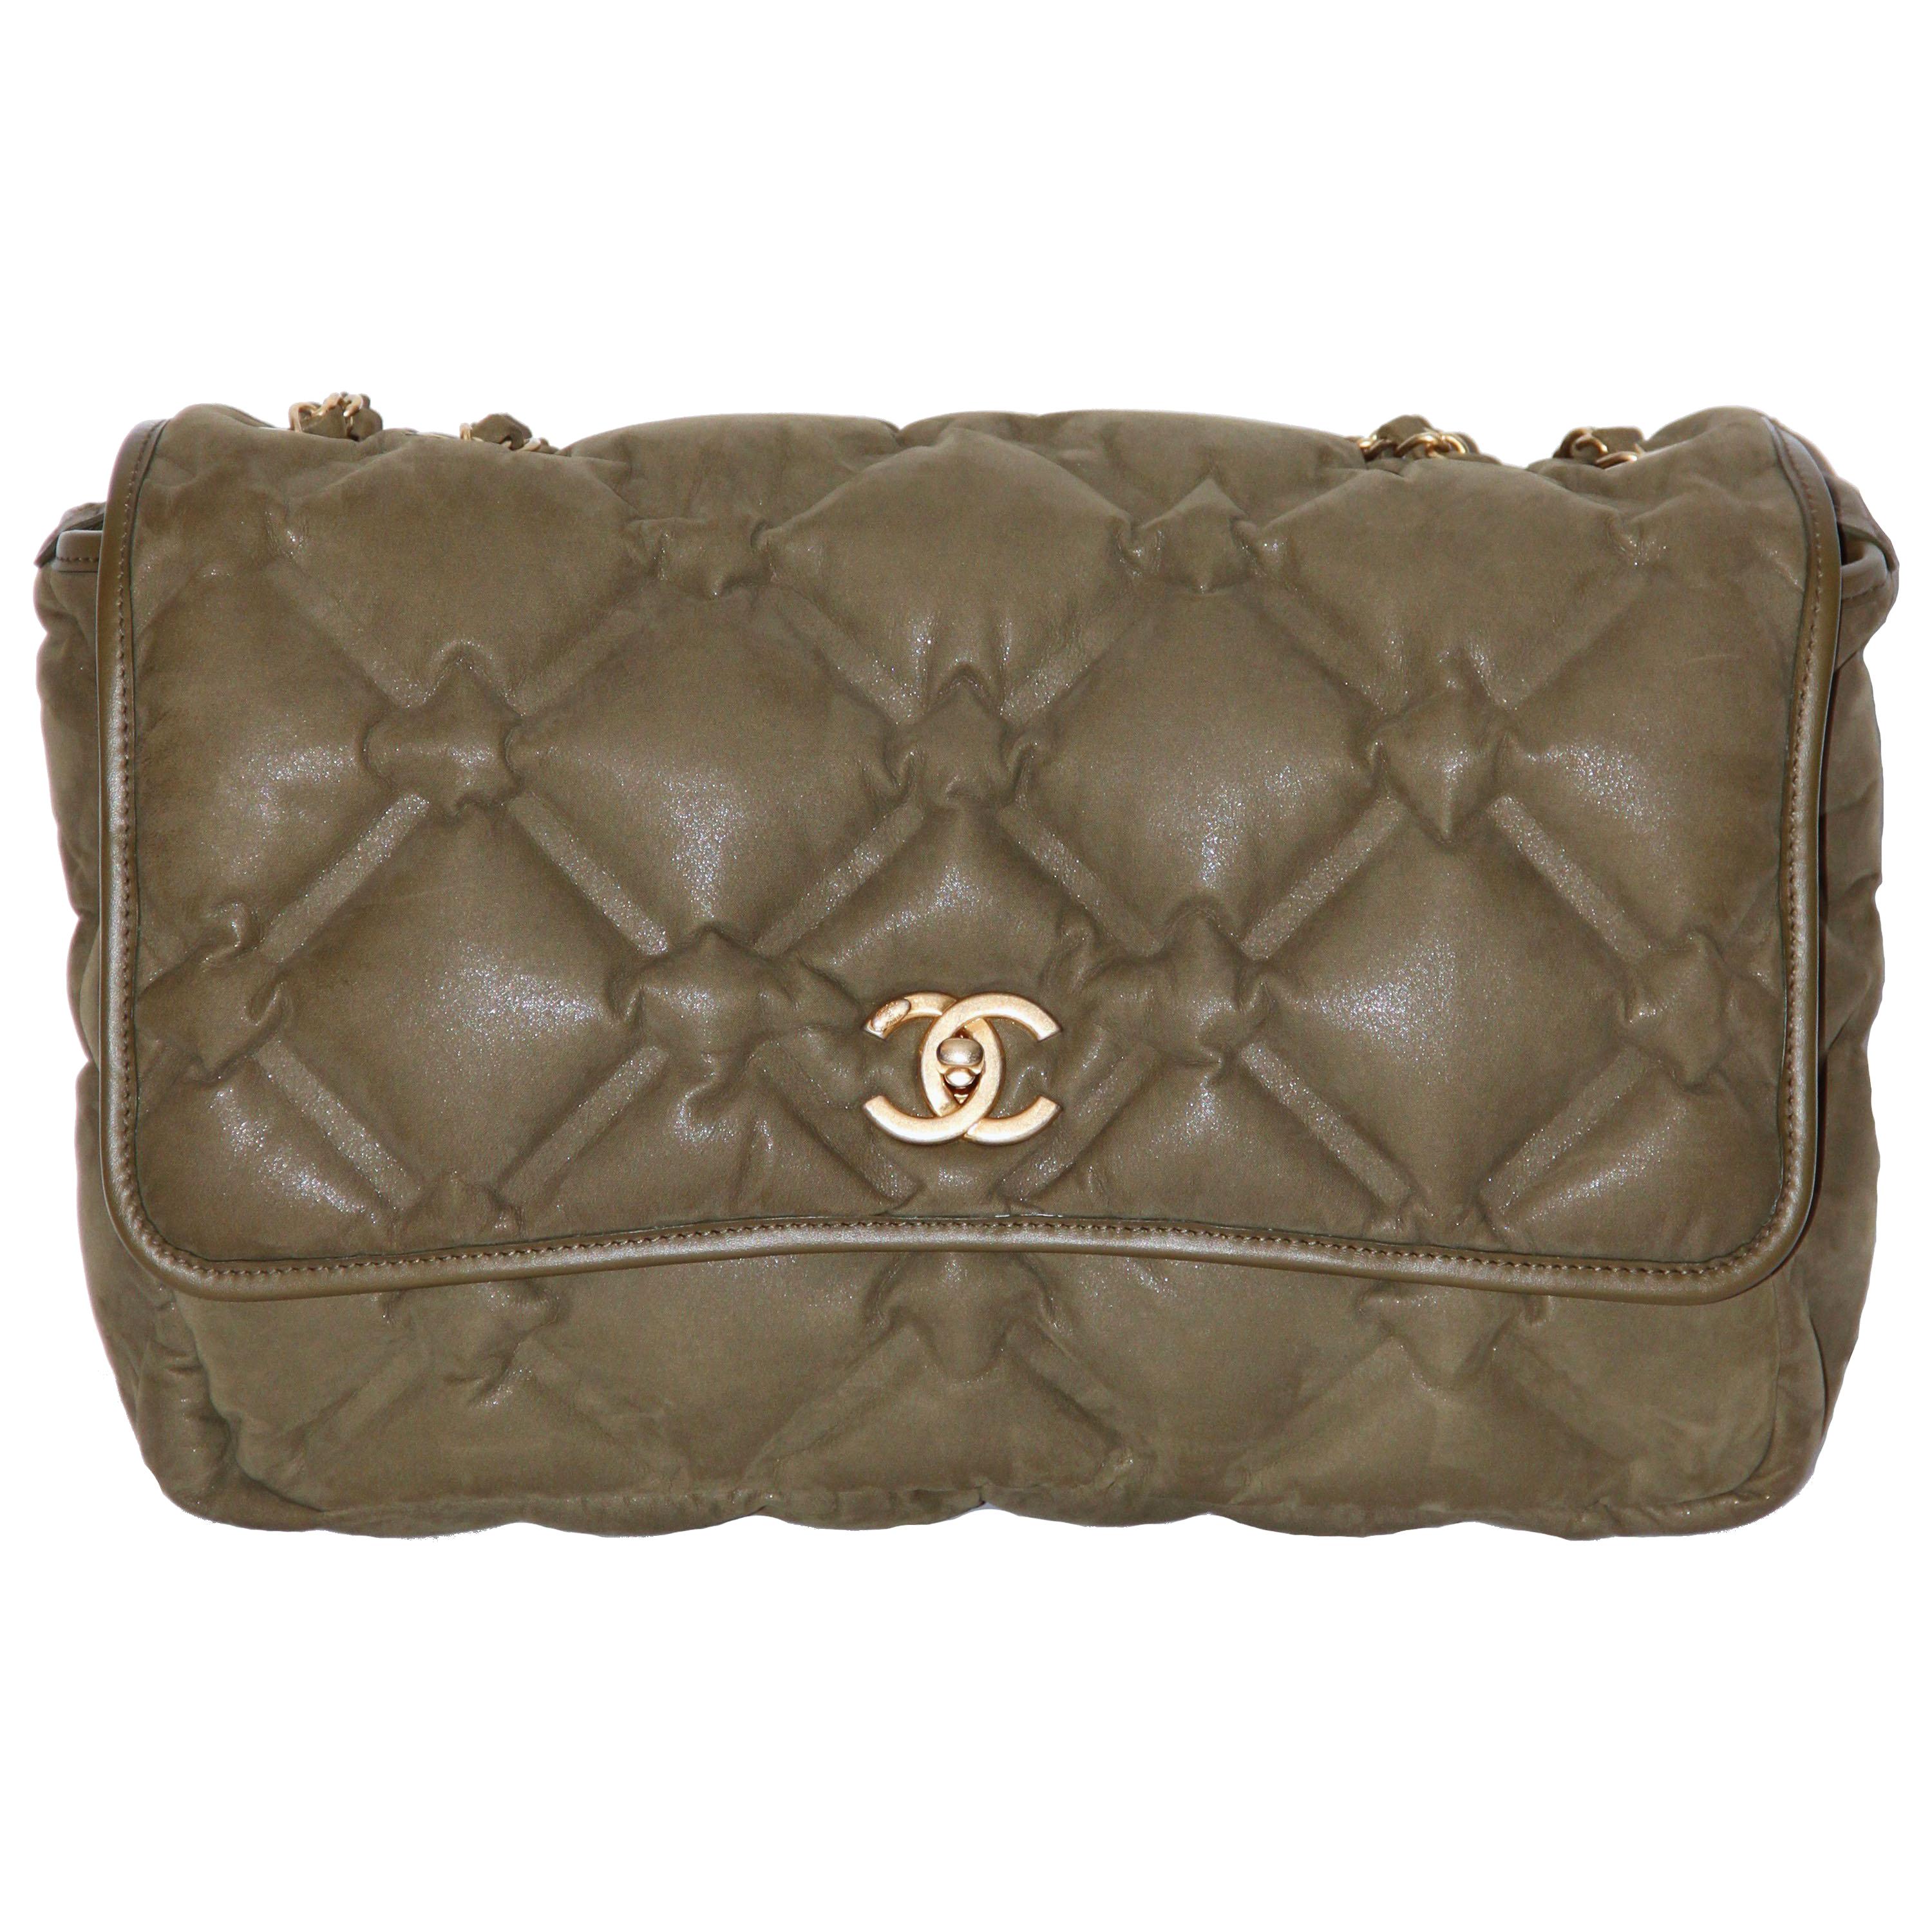 Chanel Kaki Iridescent Leather Jumbo Chesterfield Bag